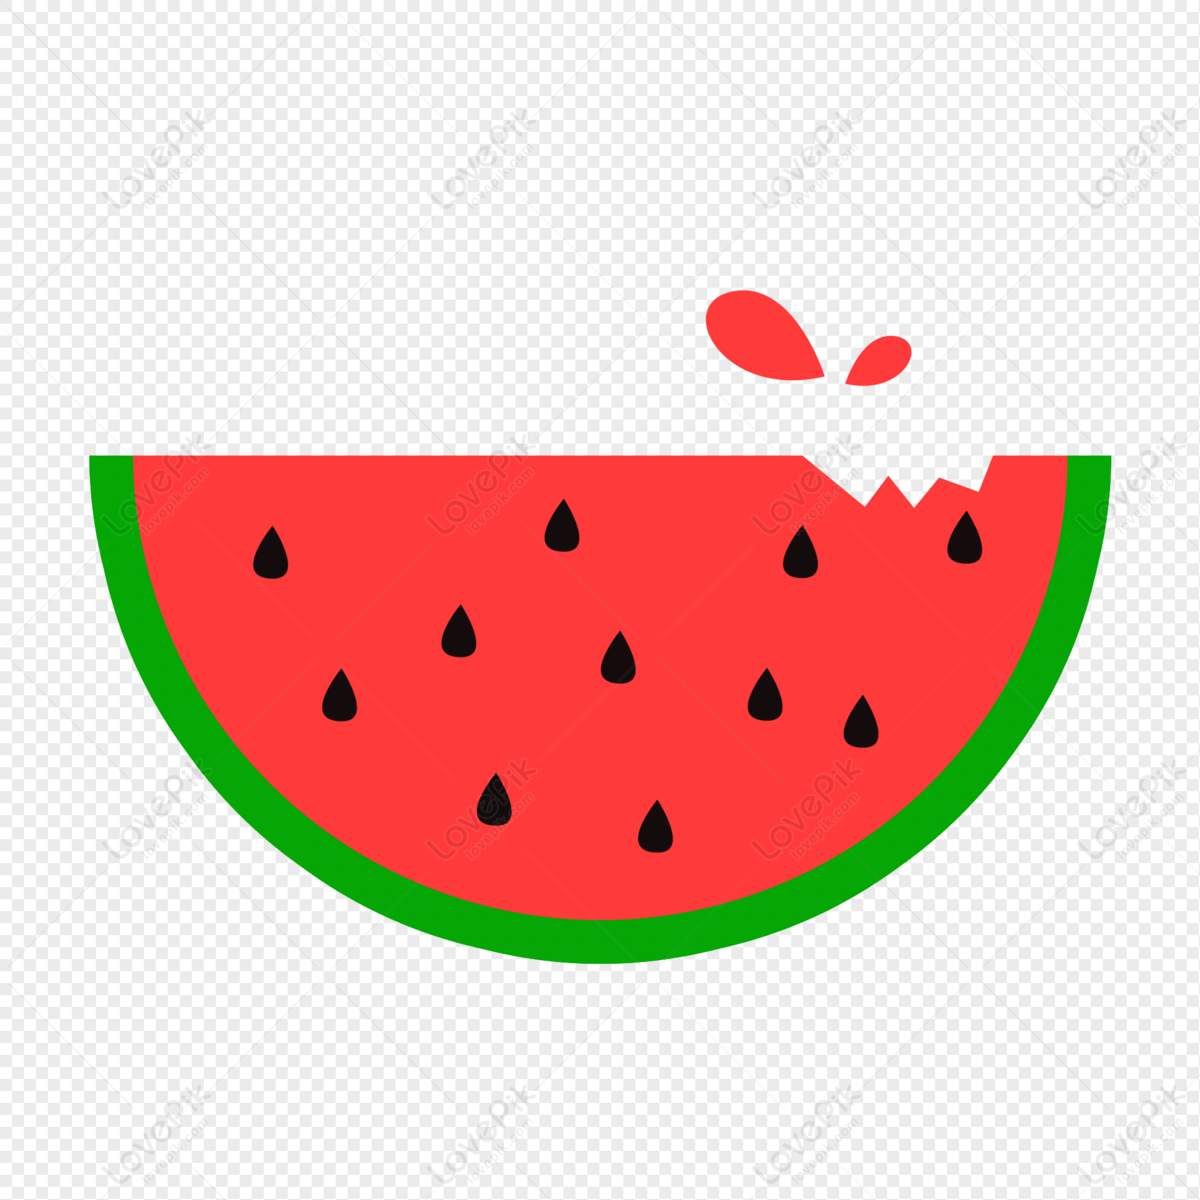 Watermelon PNG. График арбуз